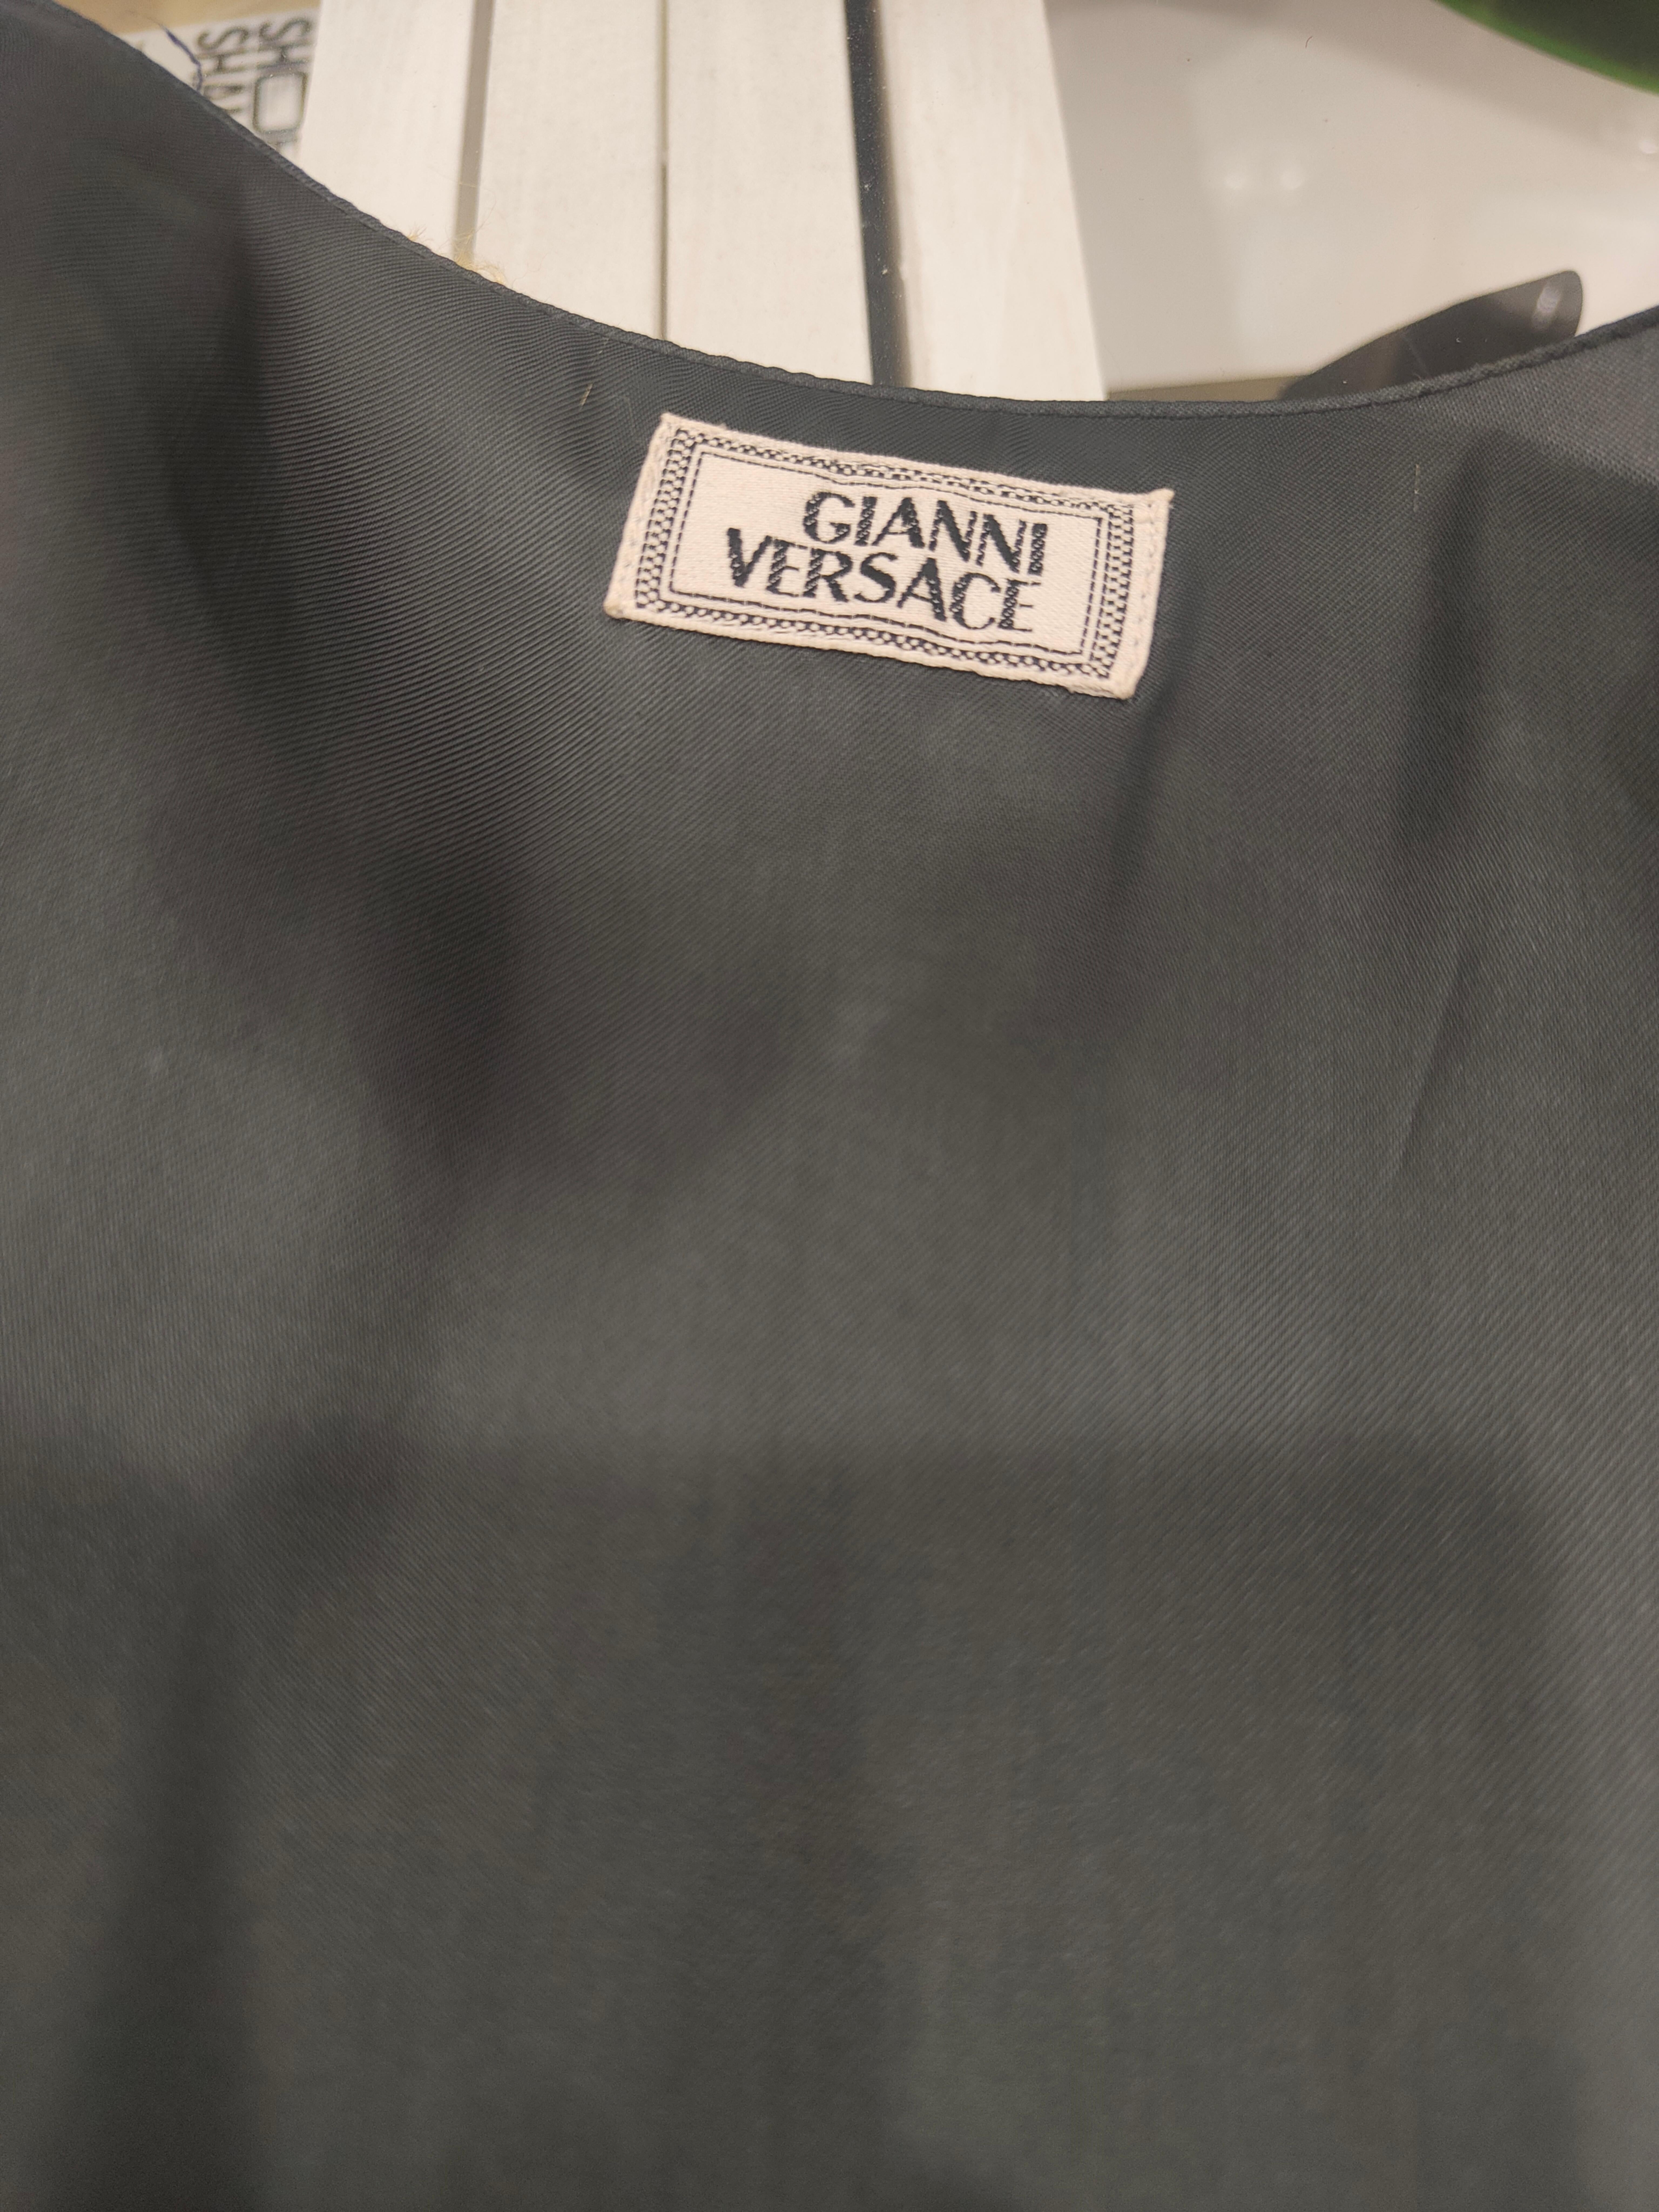 Gianni Versace Black Gold vest
Size 48